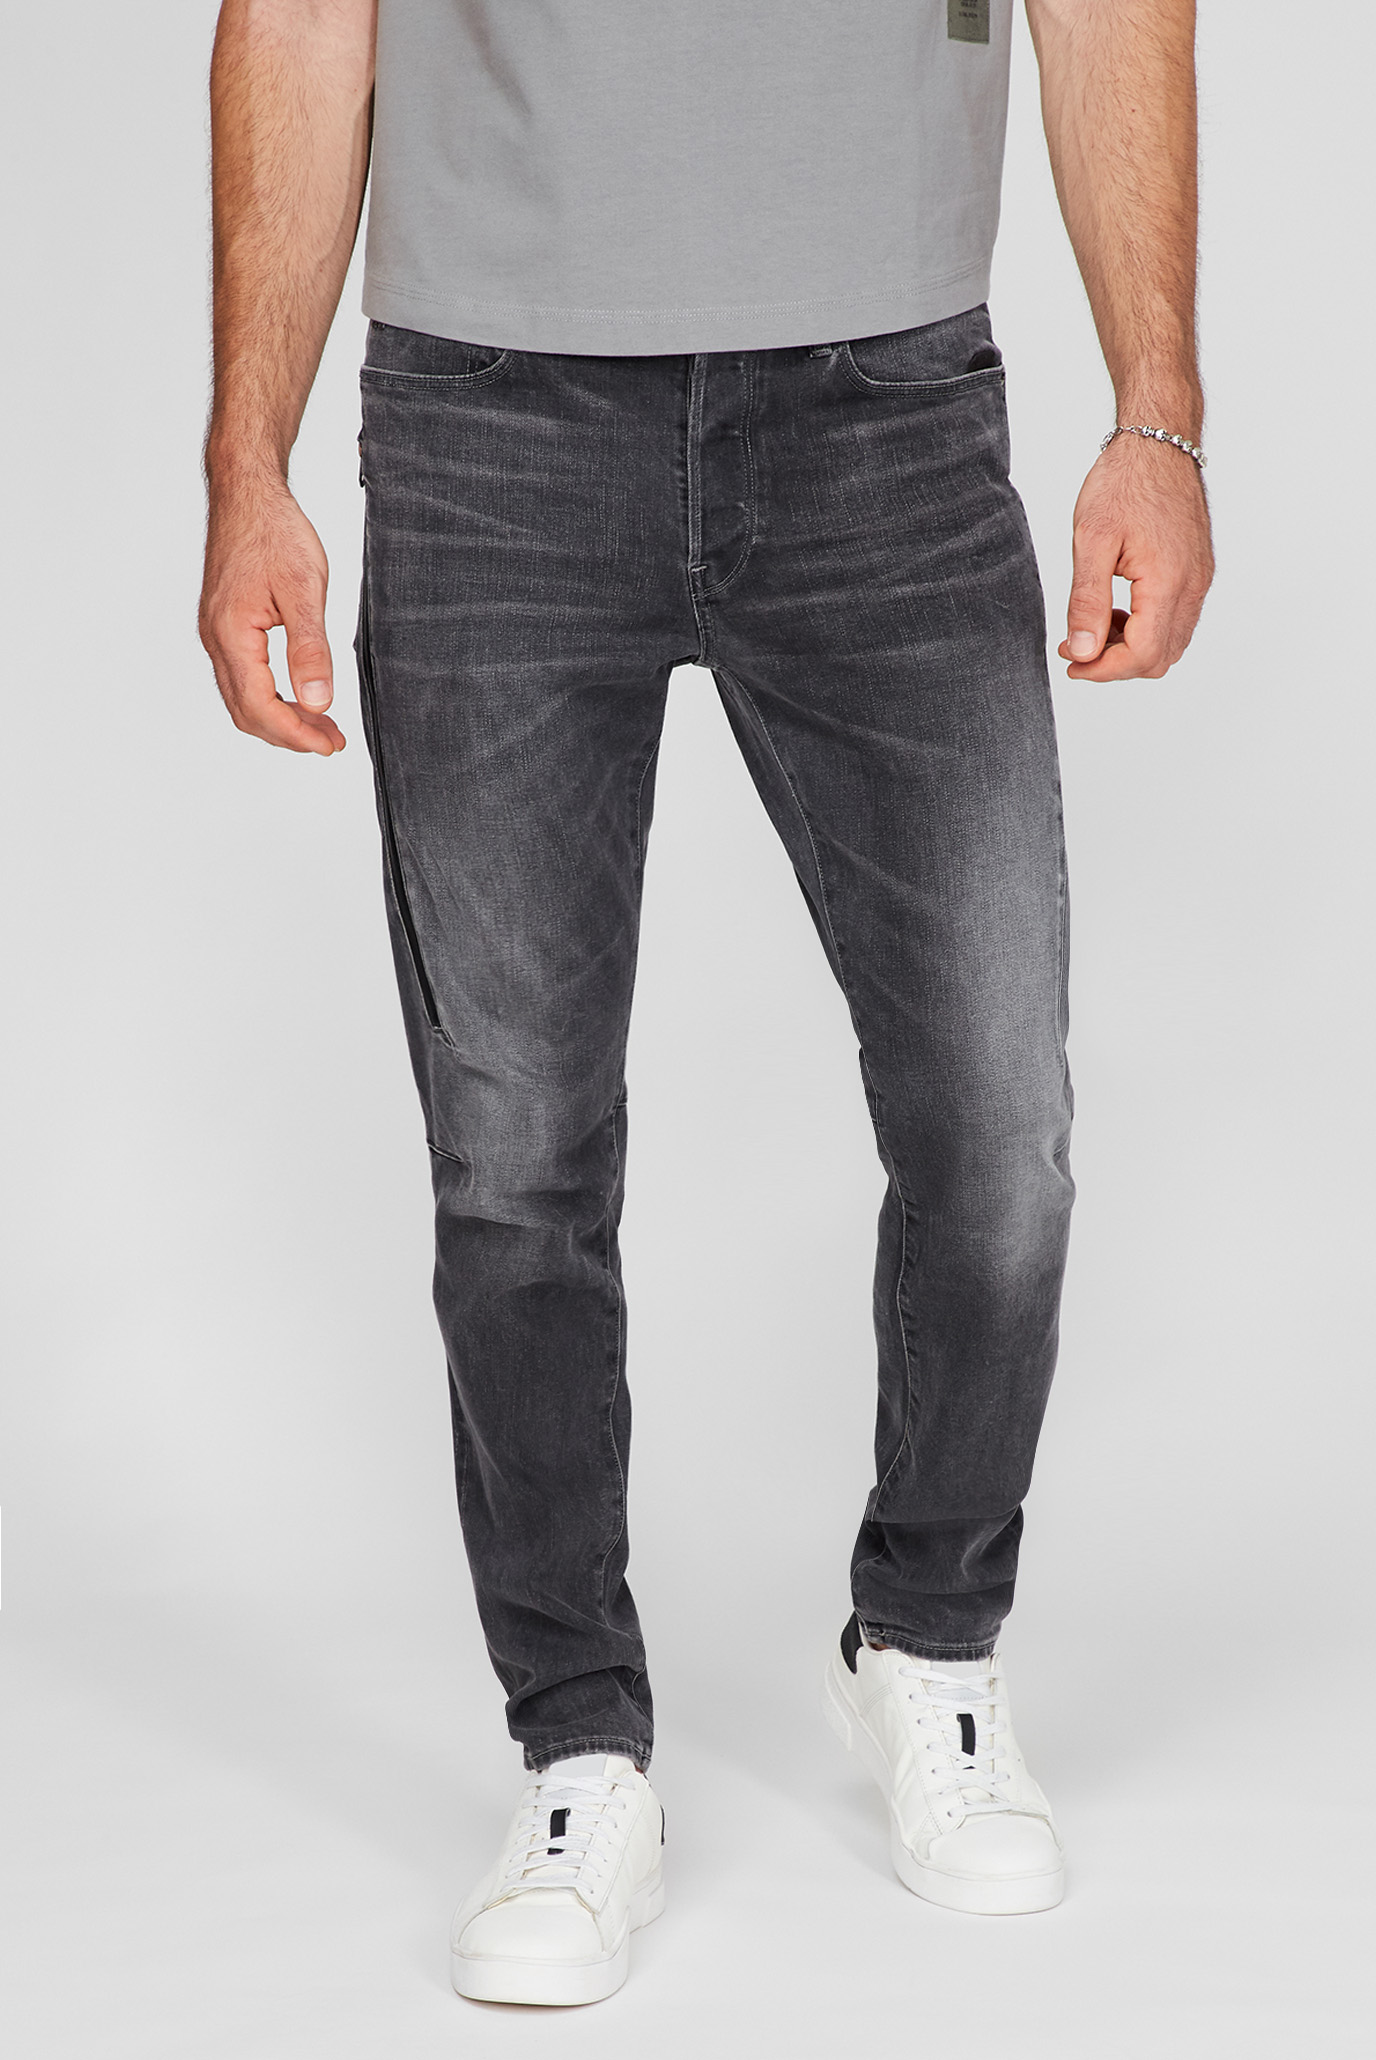 Чоловічі сірі джинси Citishield 3D Slim Tapered 1